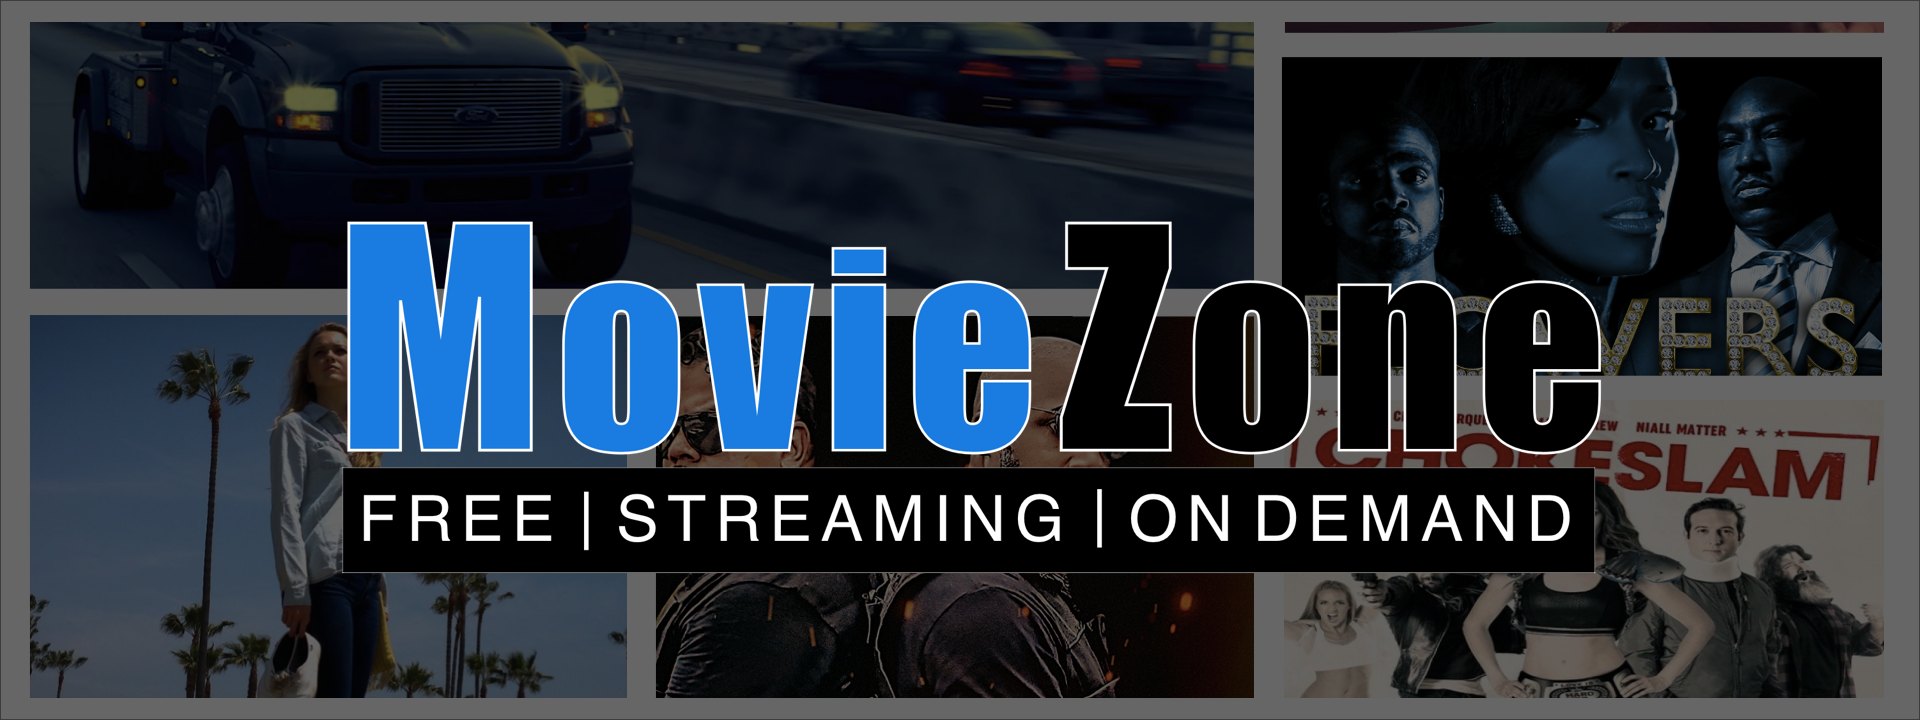 MovieZone-FeaturedImage-1920x720